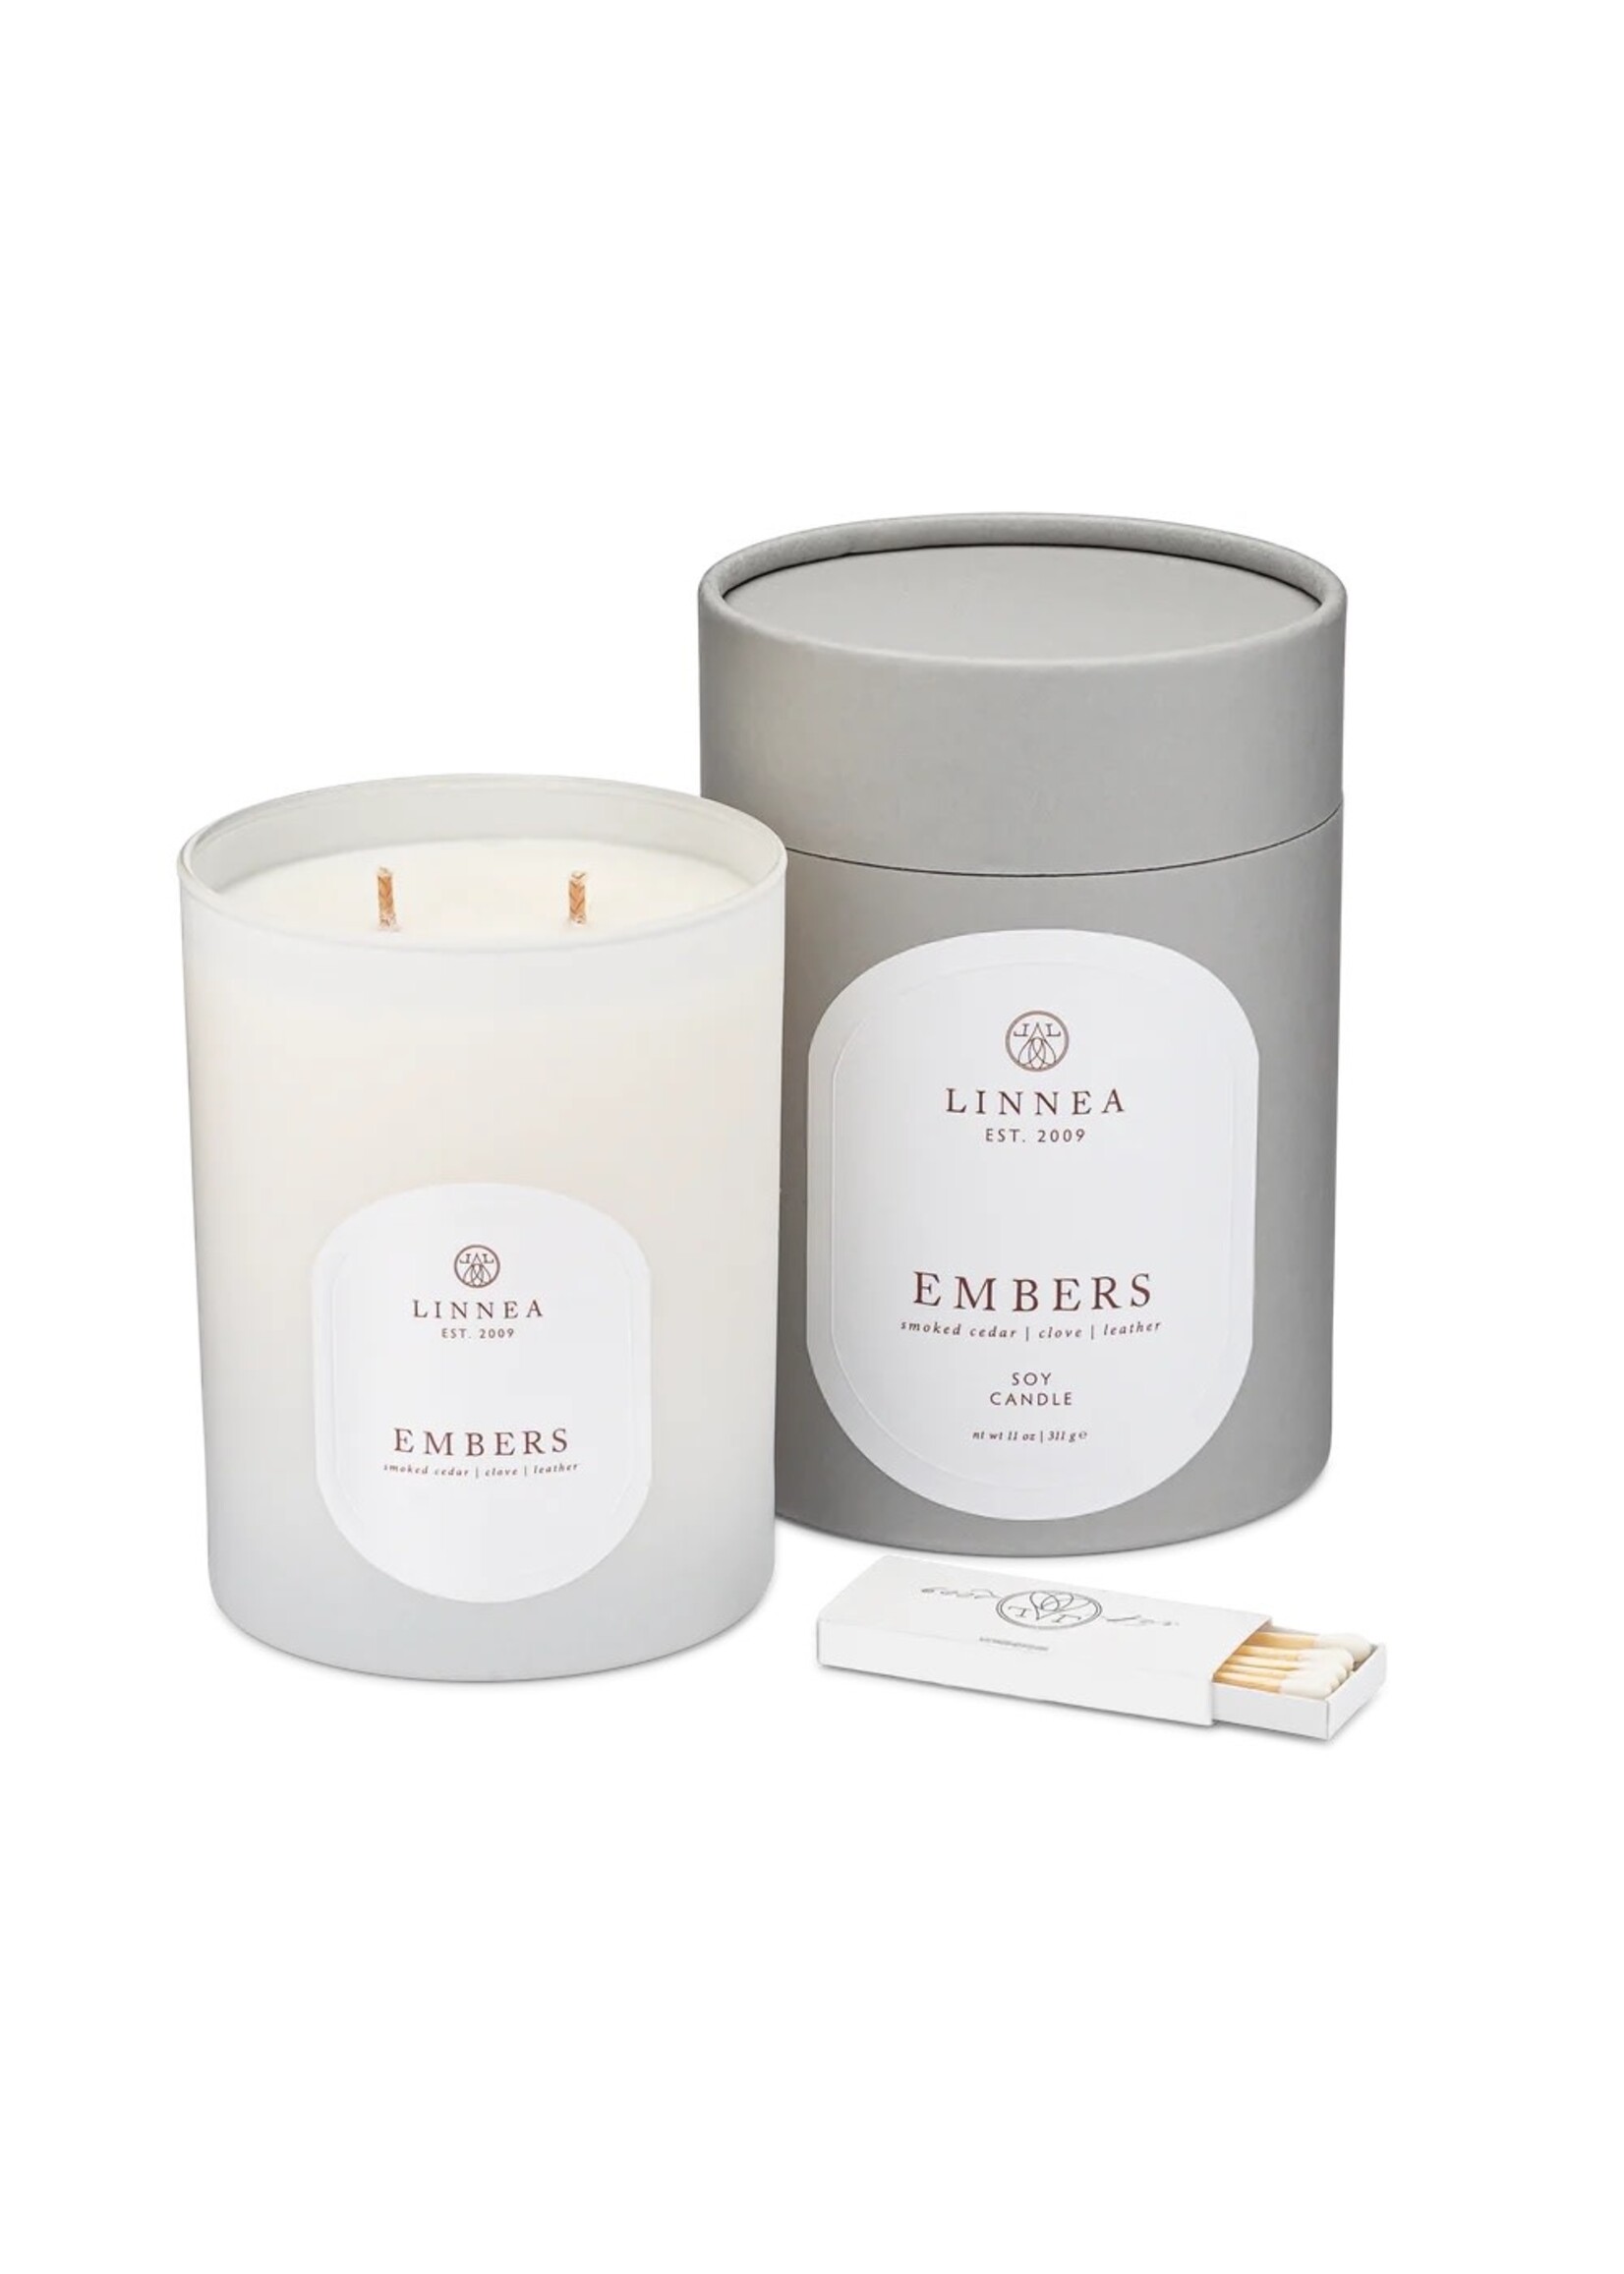 Linnea & Co. Candle - Embers 2-wick